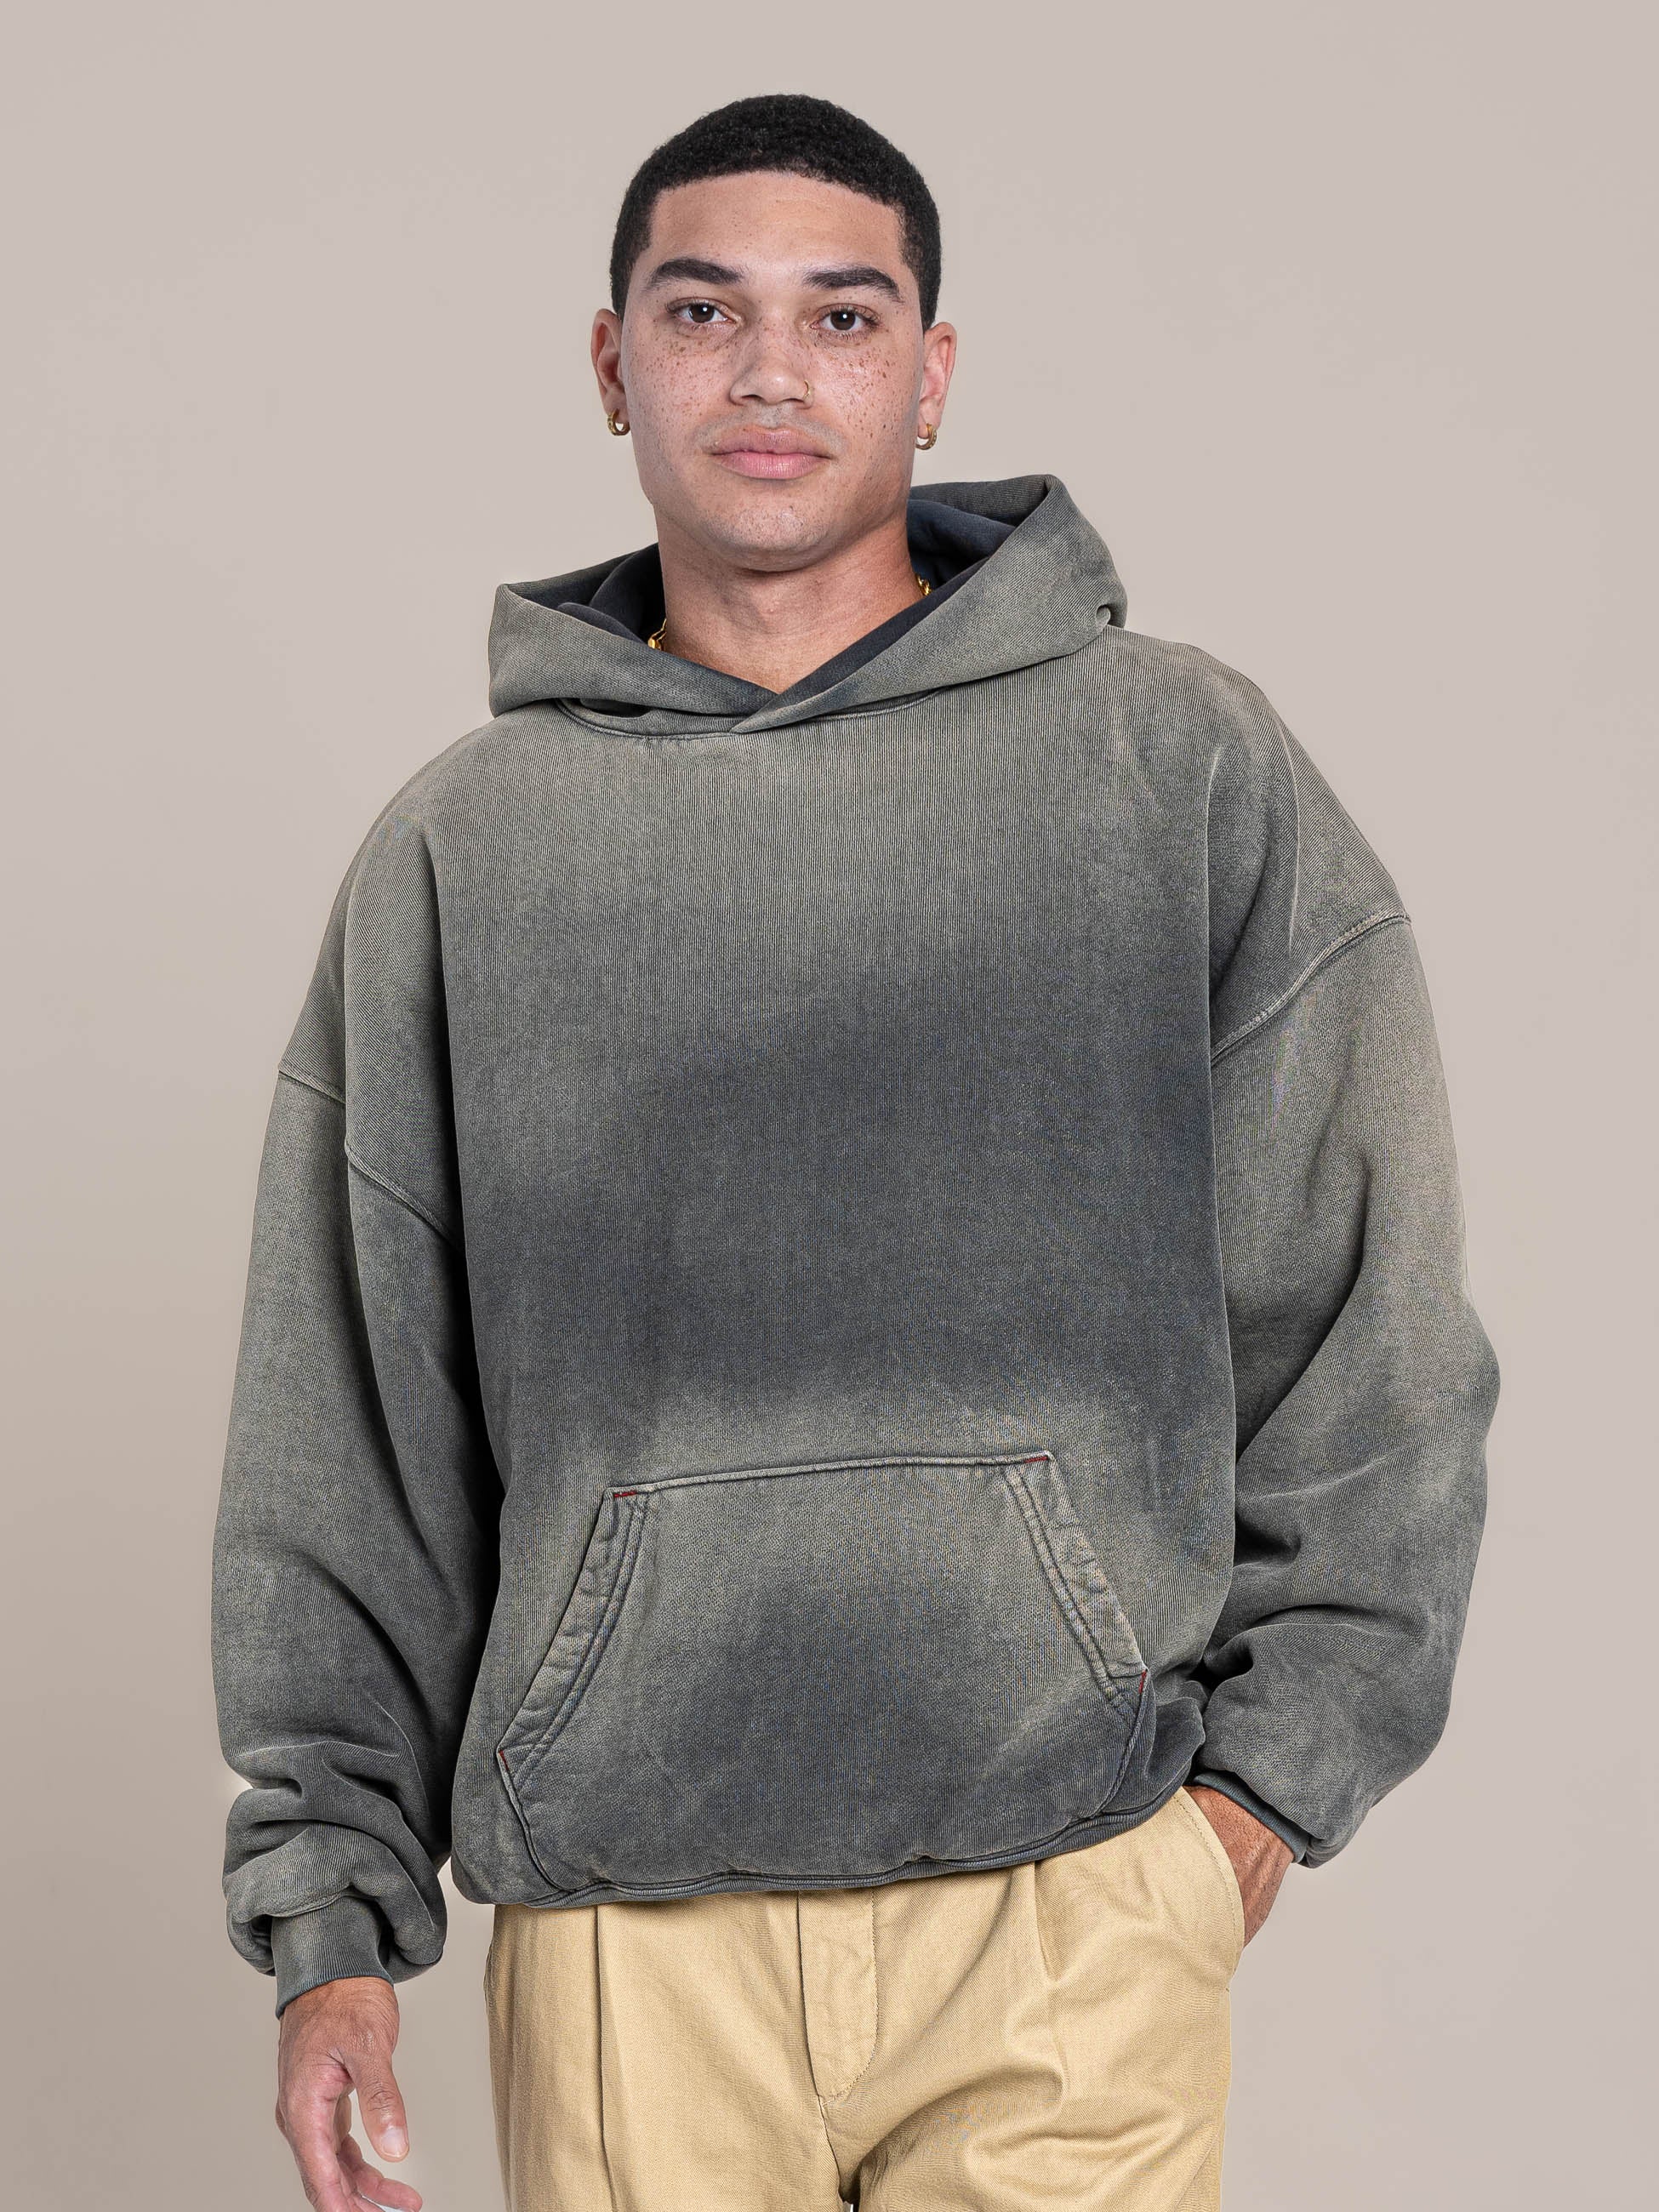 Male Model wears a Medium Size  of Publik Brand Double Layered Fleece Grey Hoodie Luxury Made in USA